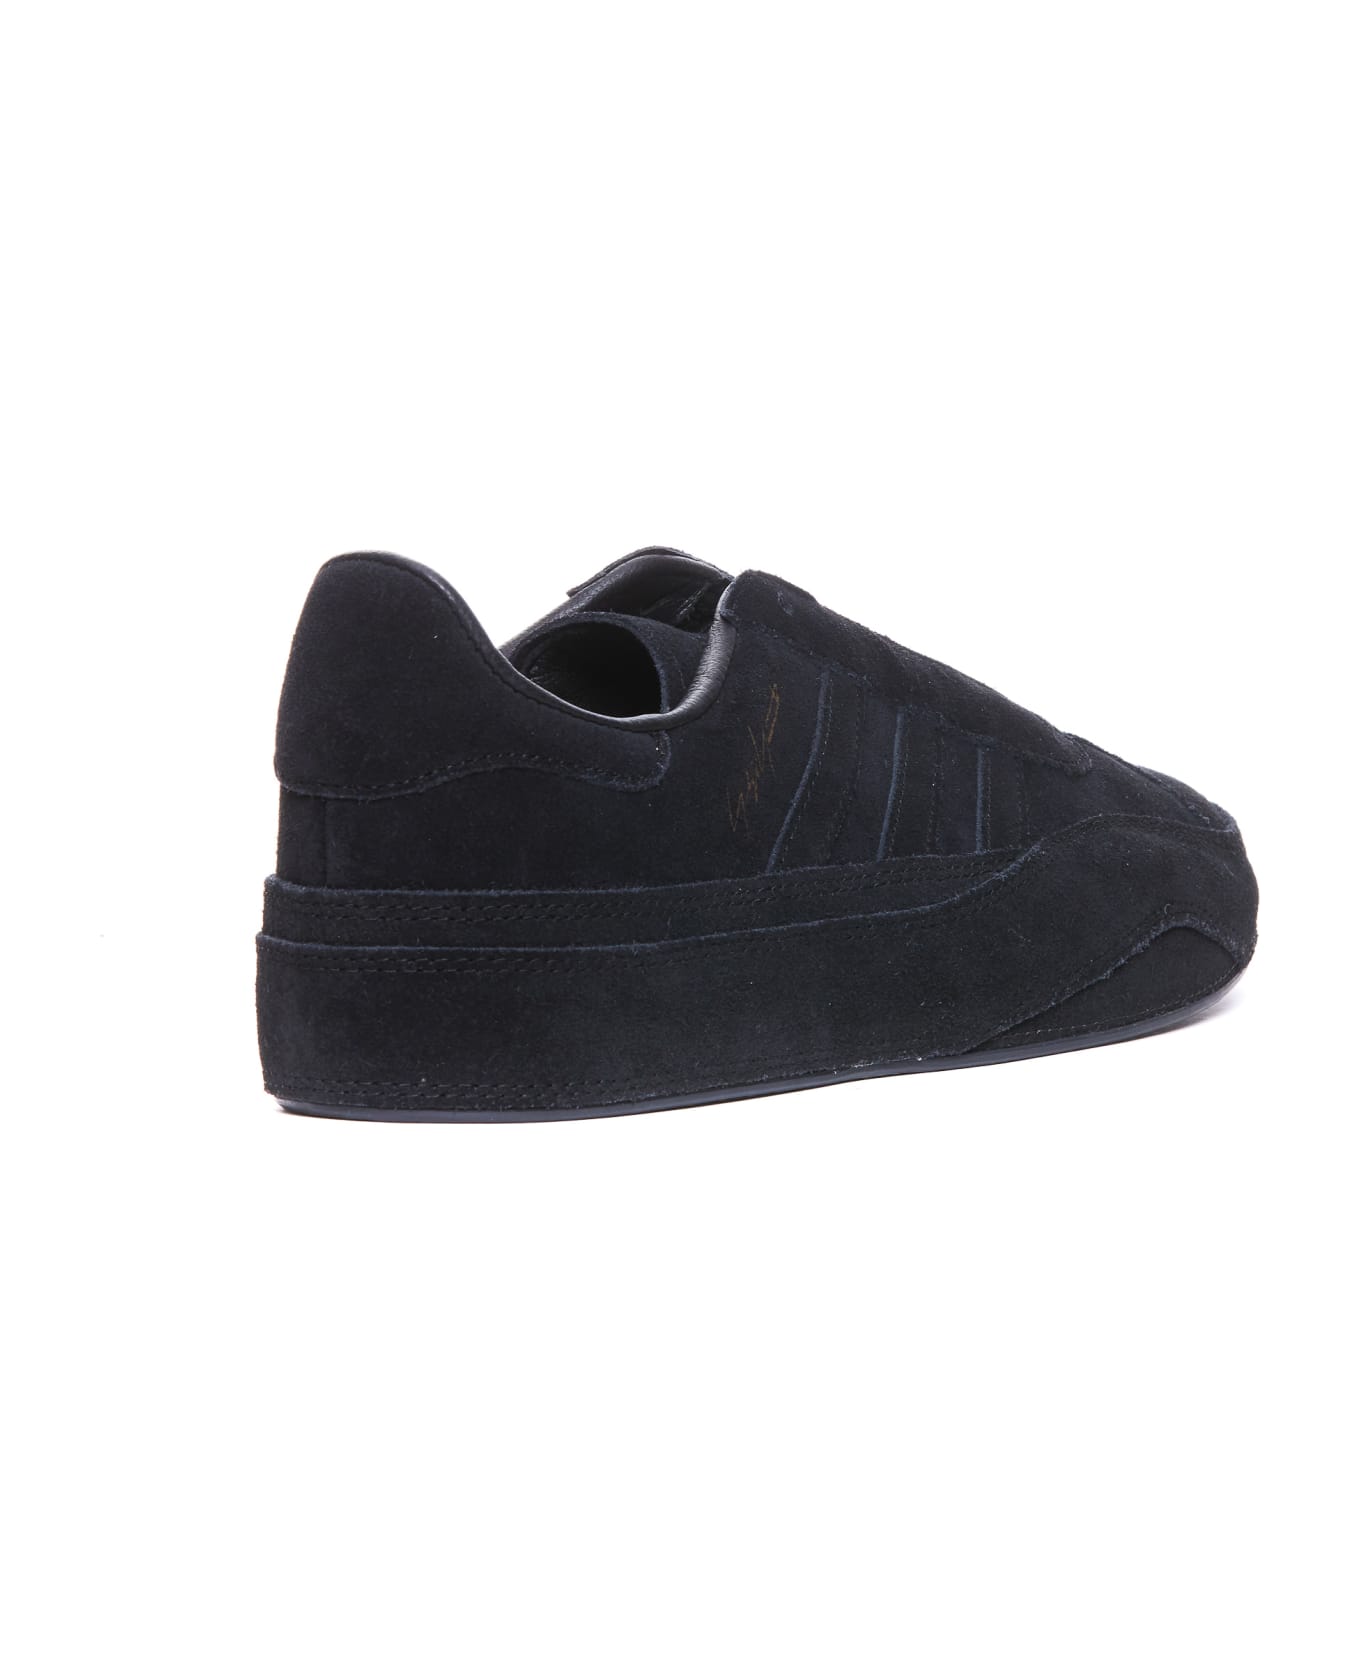 Y-3 Gazelle Sneakers - Black